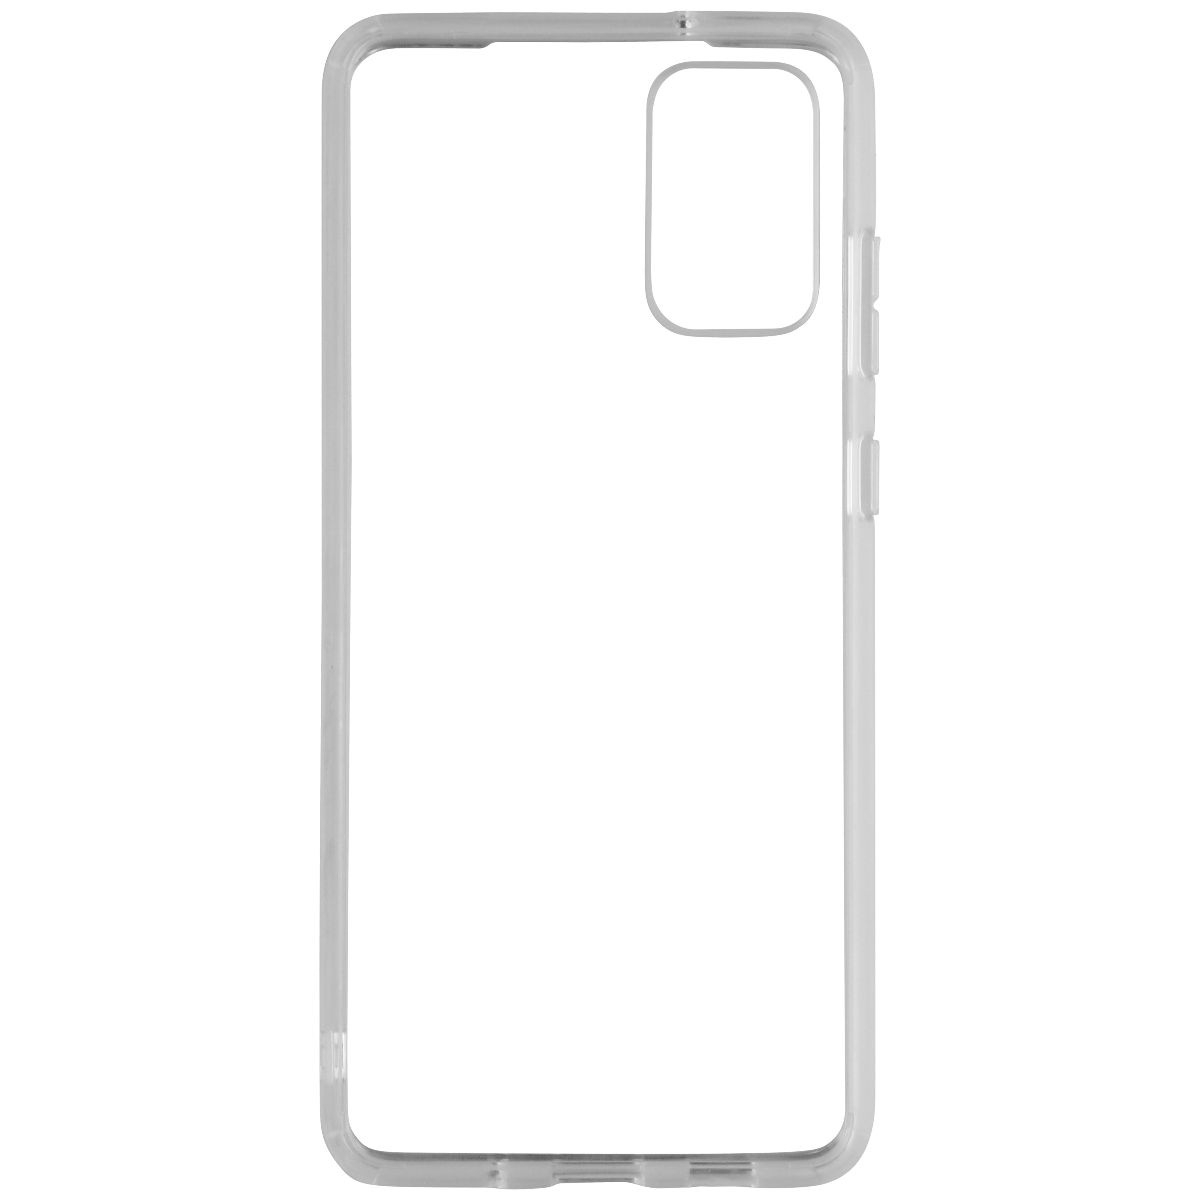 UBREAKIFIX Hardshell Case For Samsung Galaxy S20+ - Clear